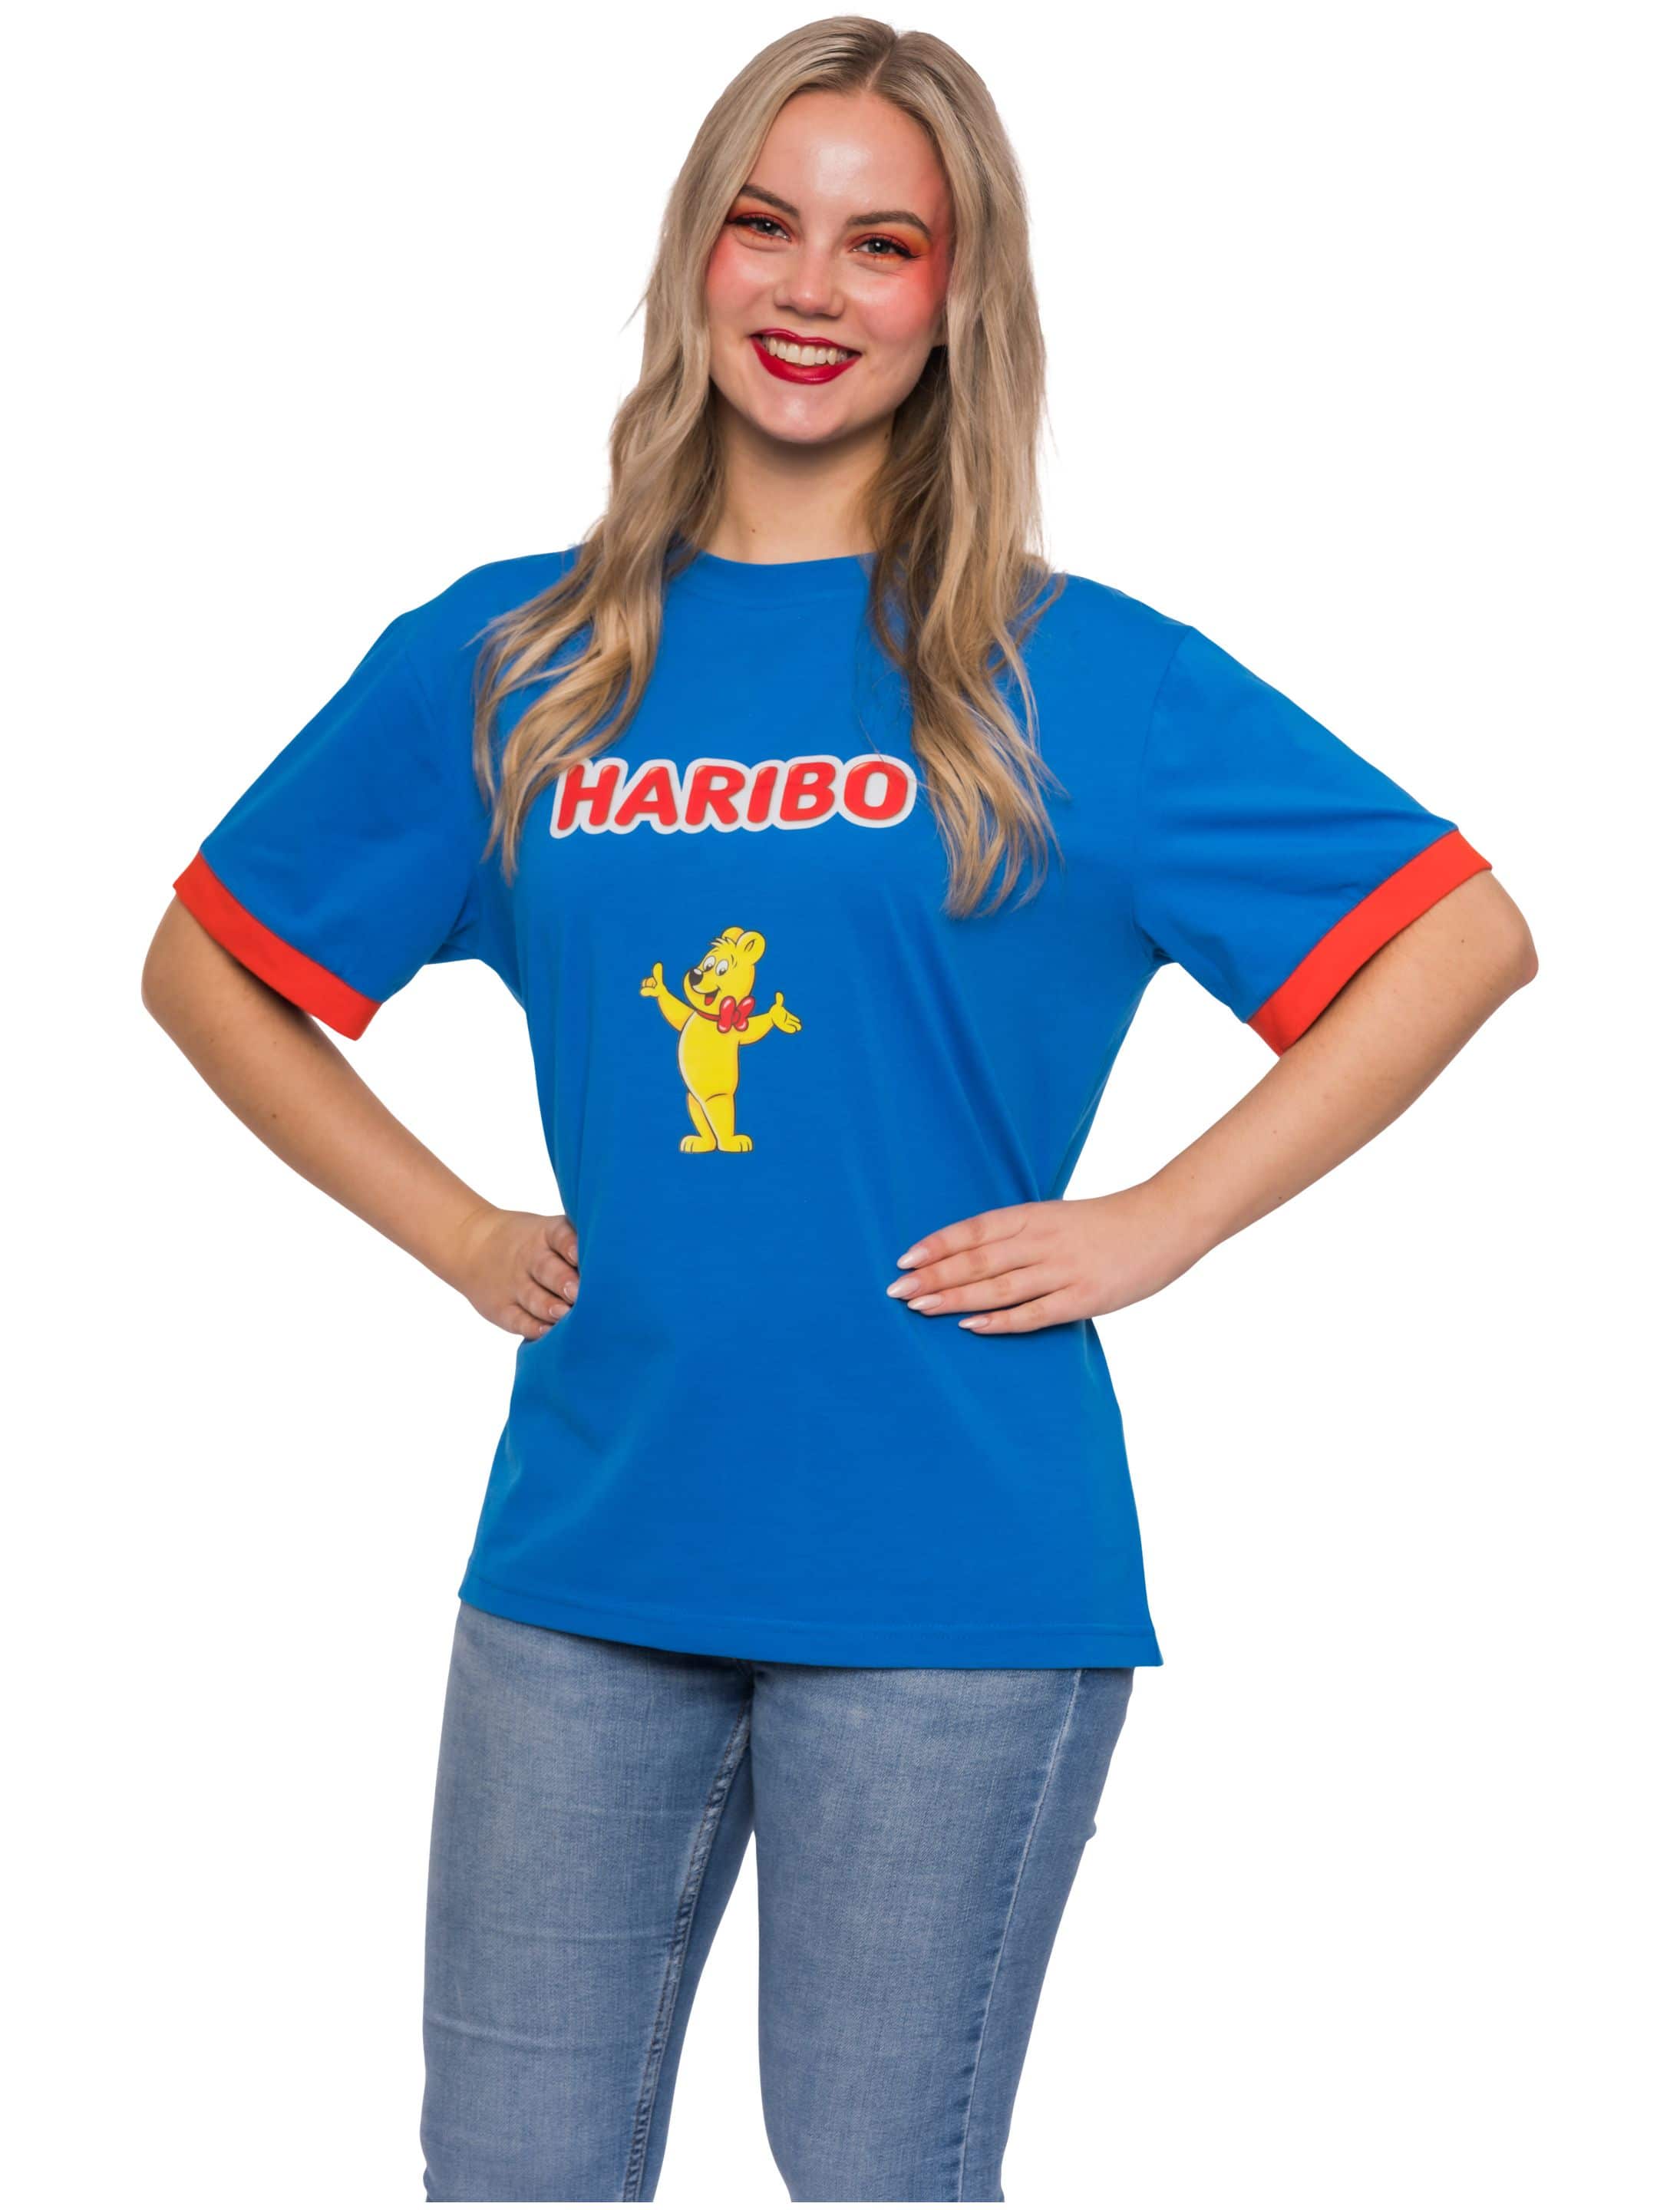 T-Shirt HARIBO Goldbären blau 2XL